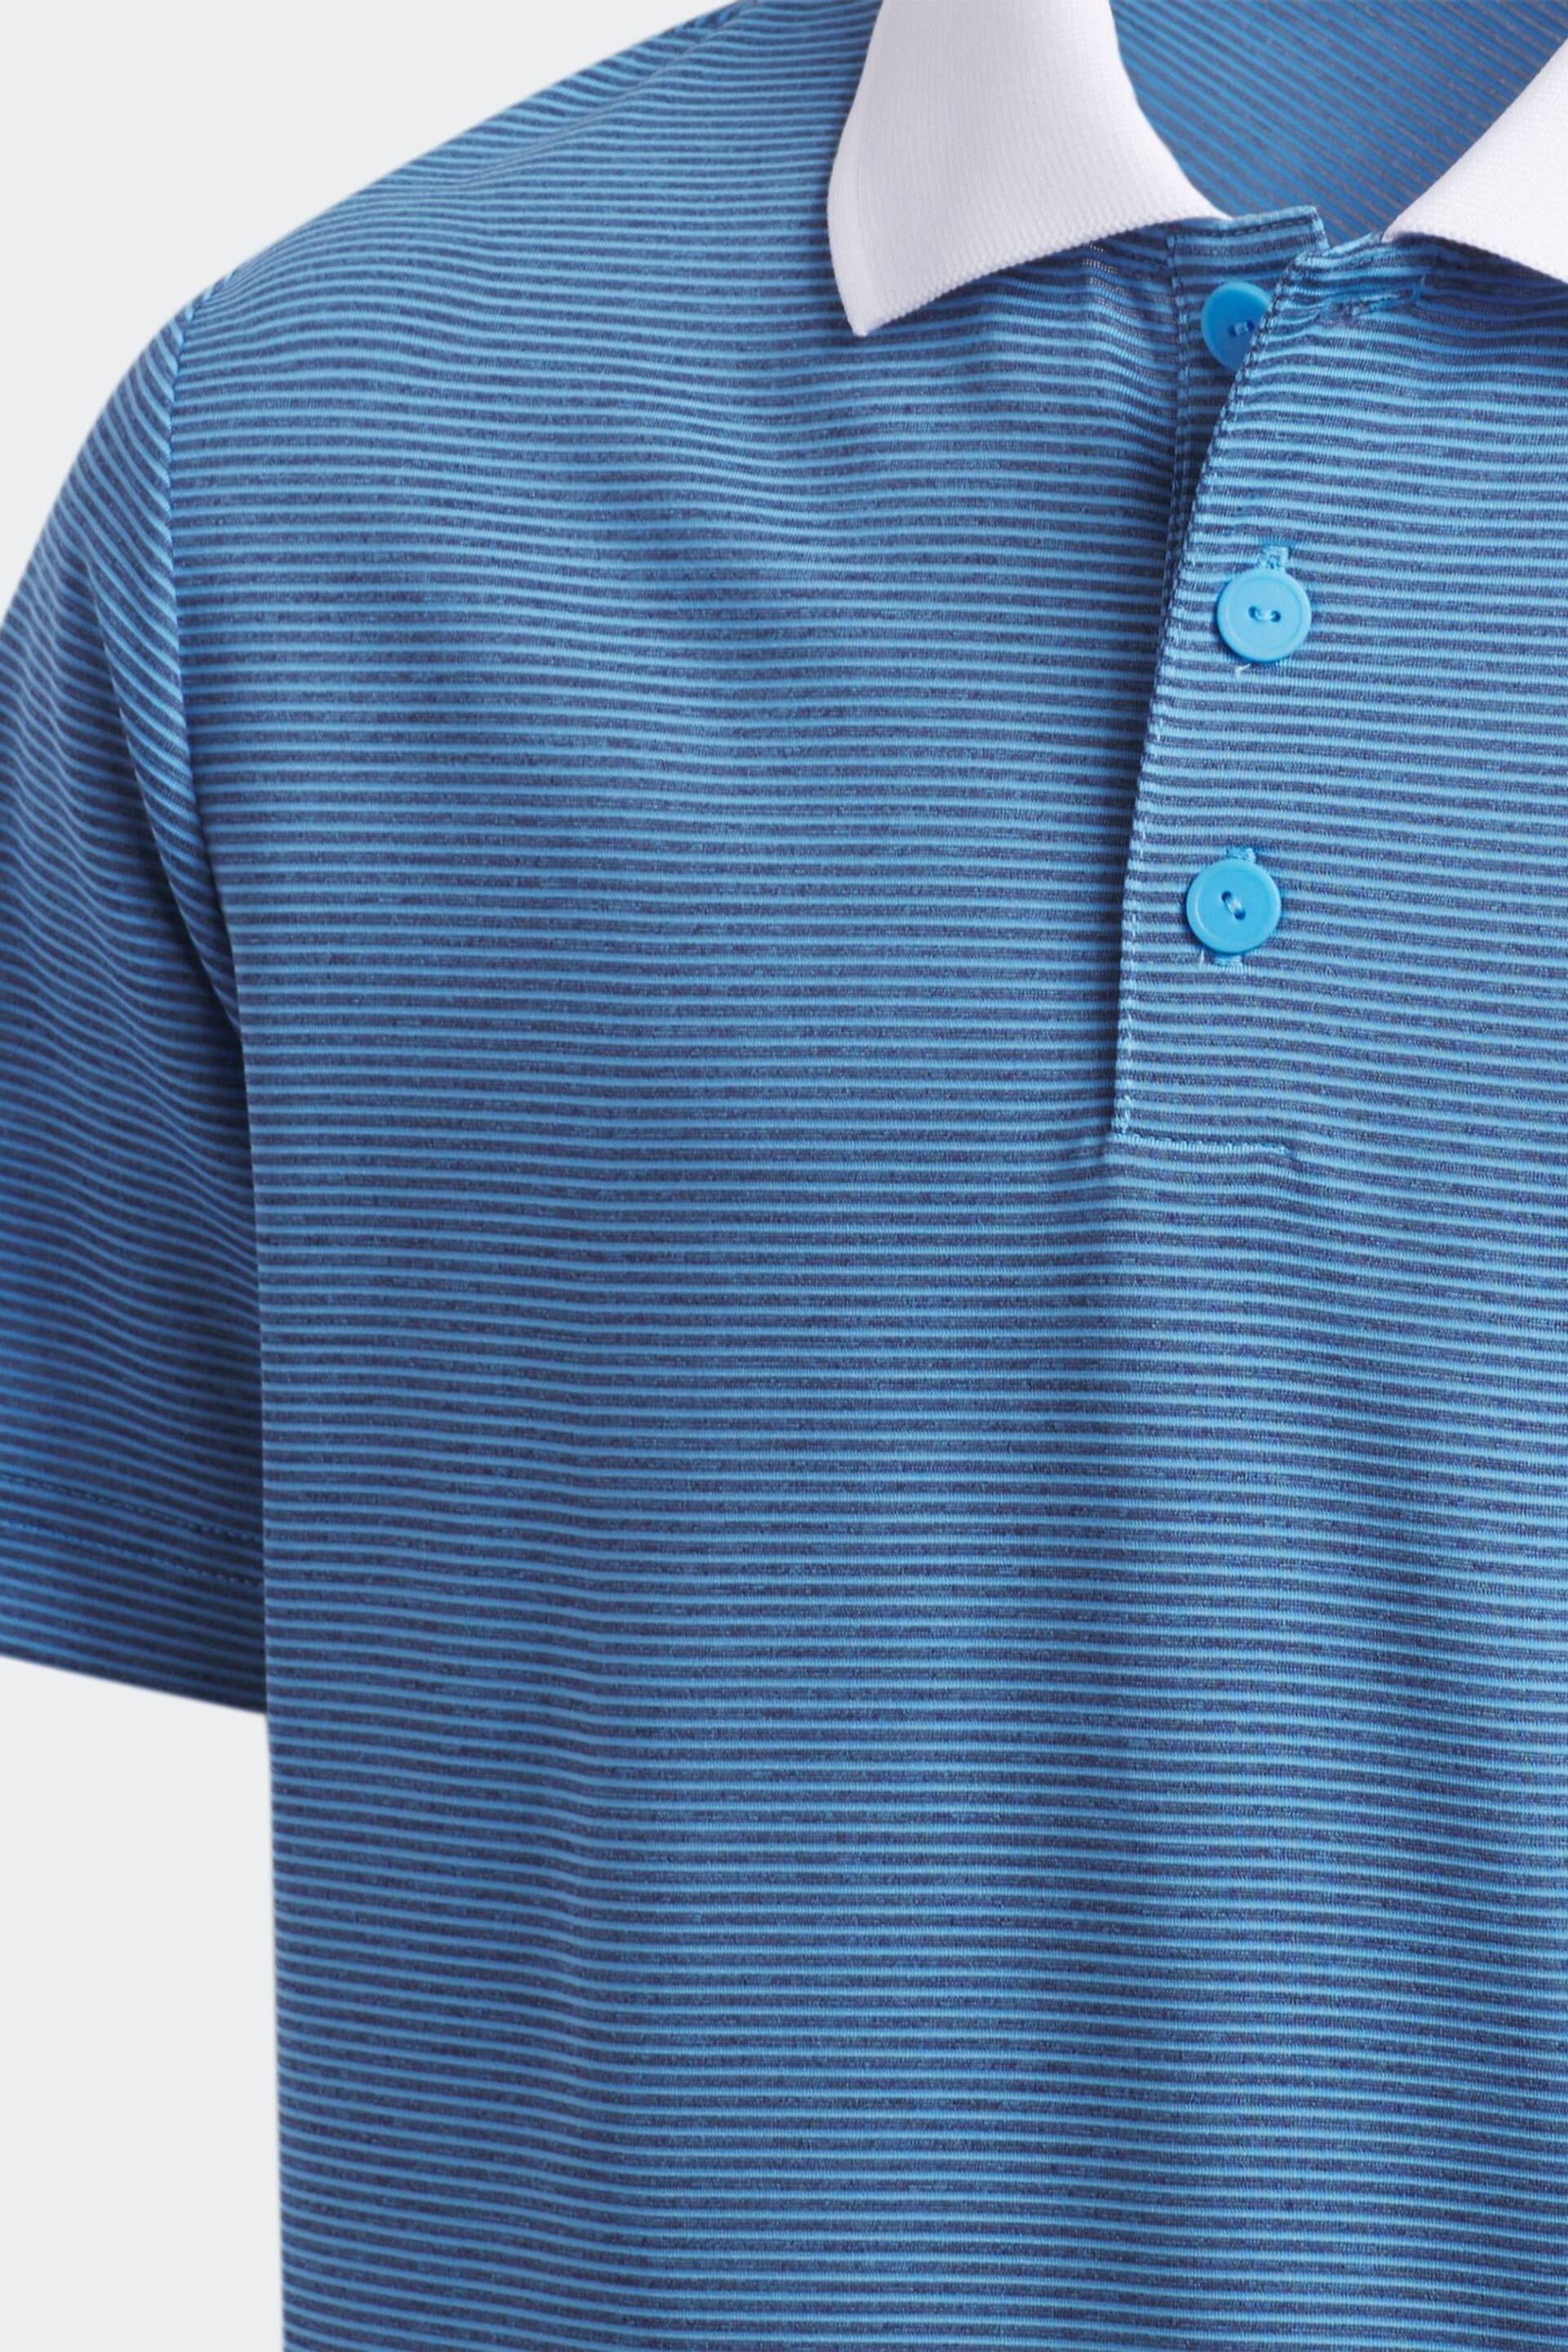 adidas Golf Striped Polo Shirt - Image 4 of 5